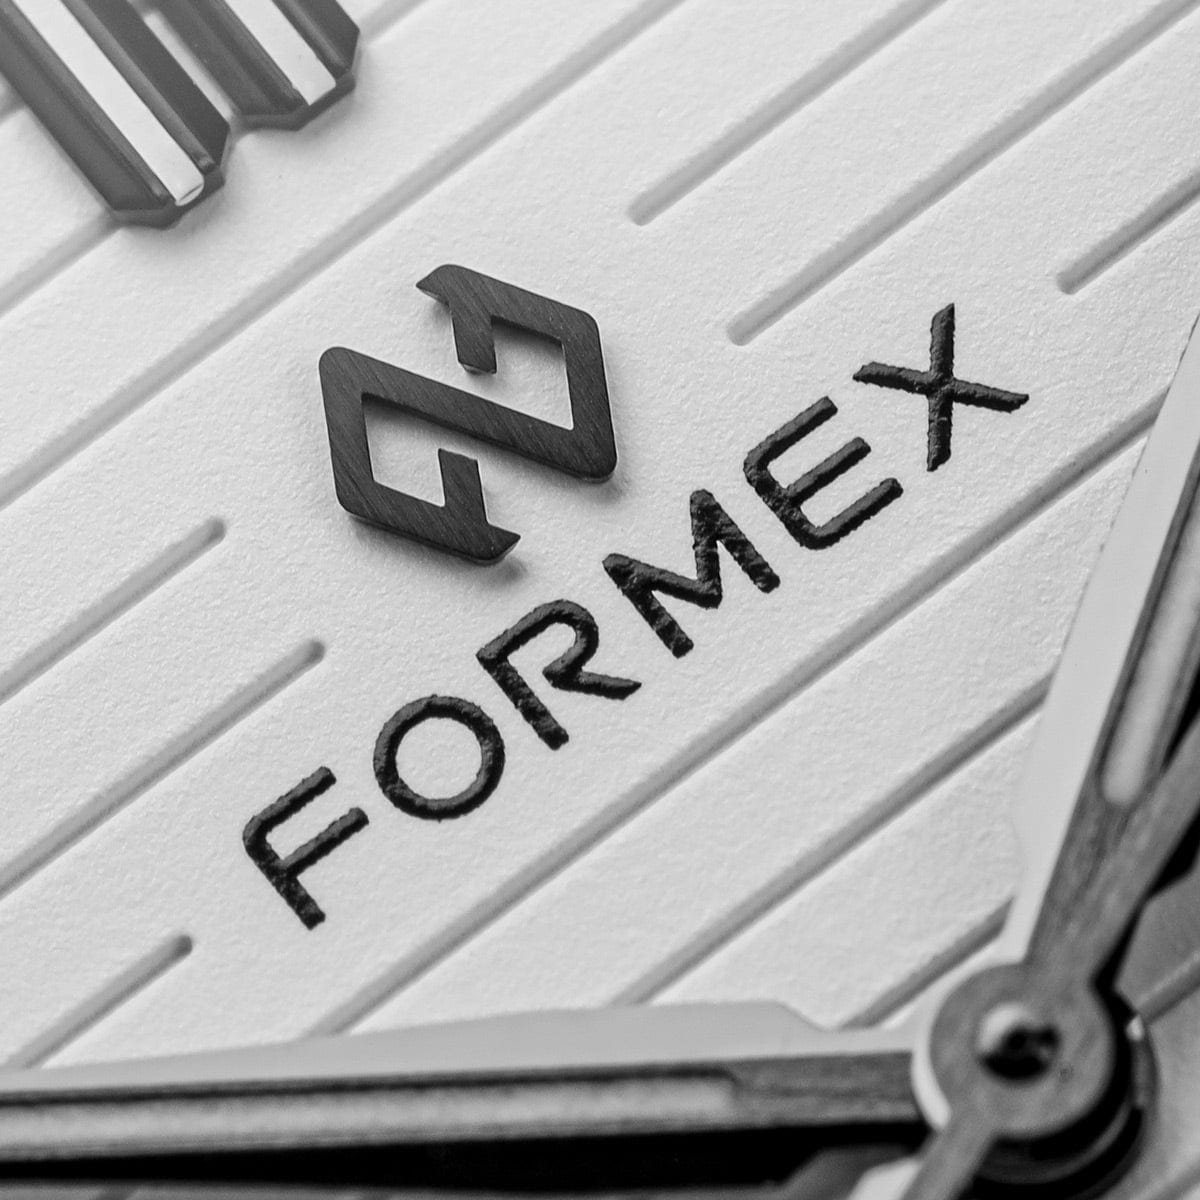 Formex Essence 39 Automatic Chronometer Watch - Green / Steel Bracelet - NEARLY NEW